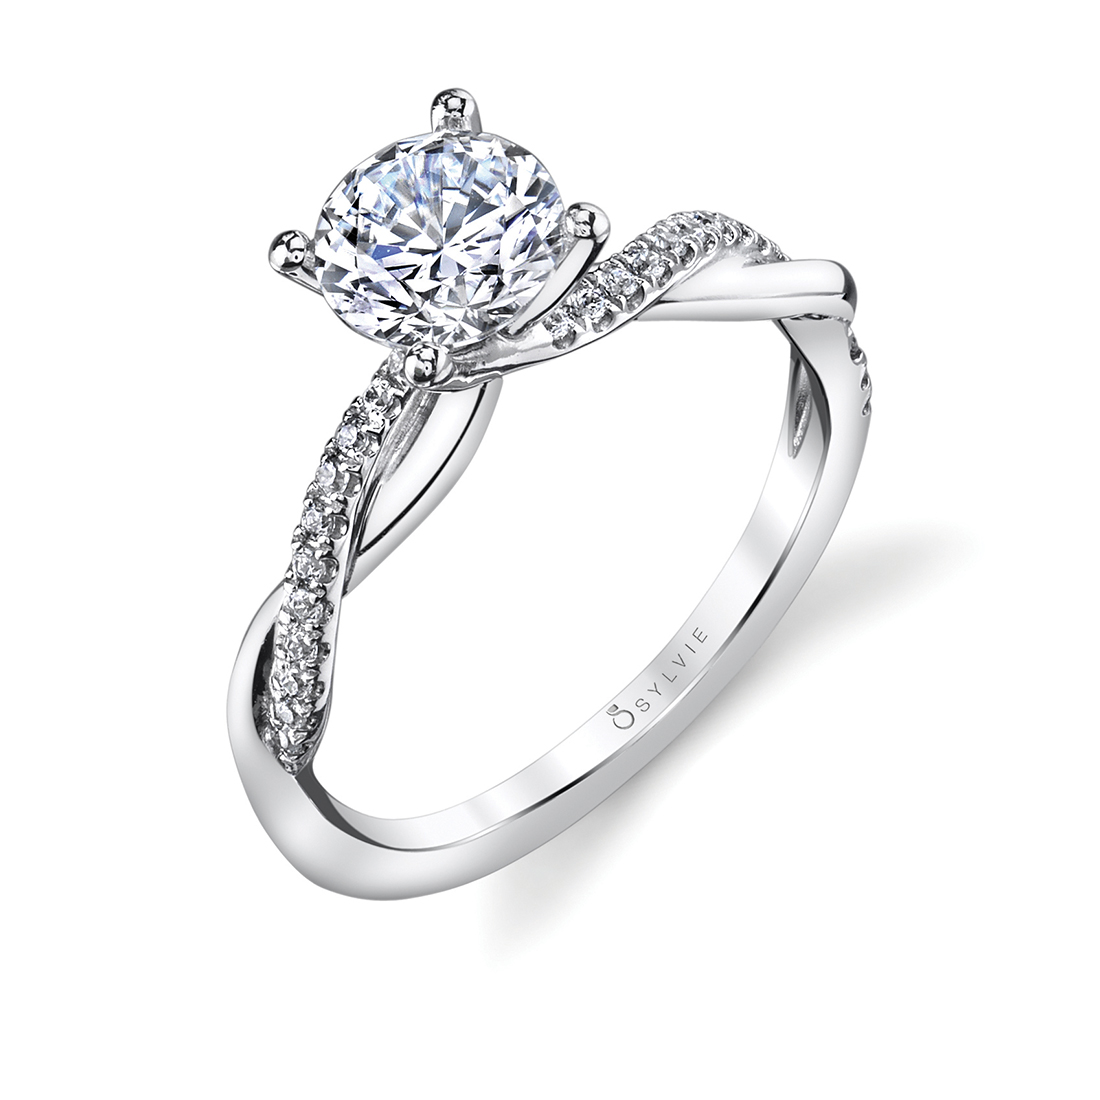 Spiral Engagement Ring - Yasmine Stuart Benjamin & Co. Jewelry Designs San Diego, CA